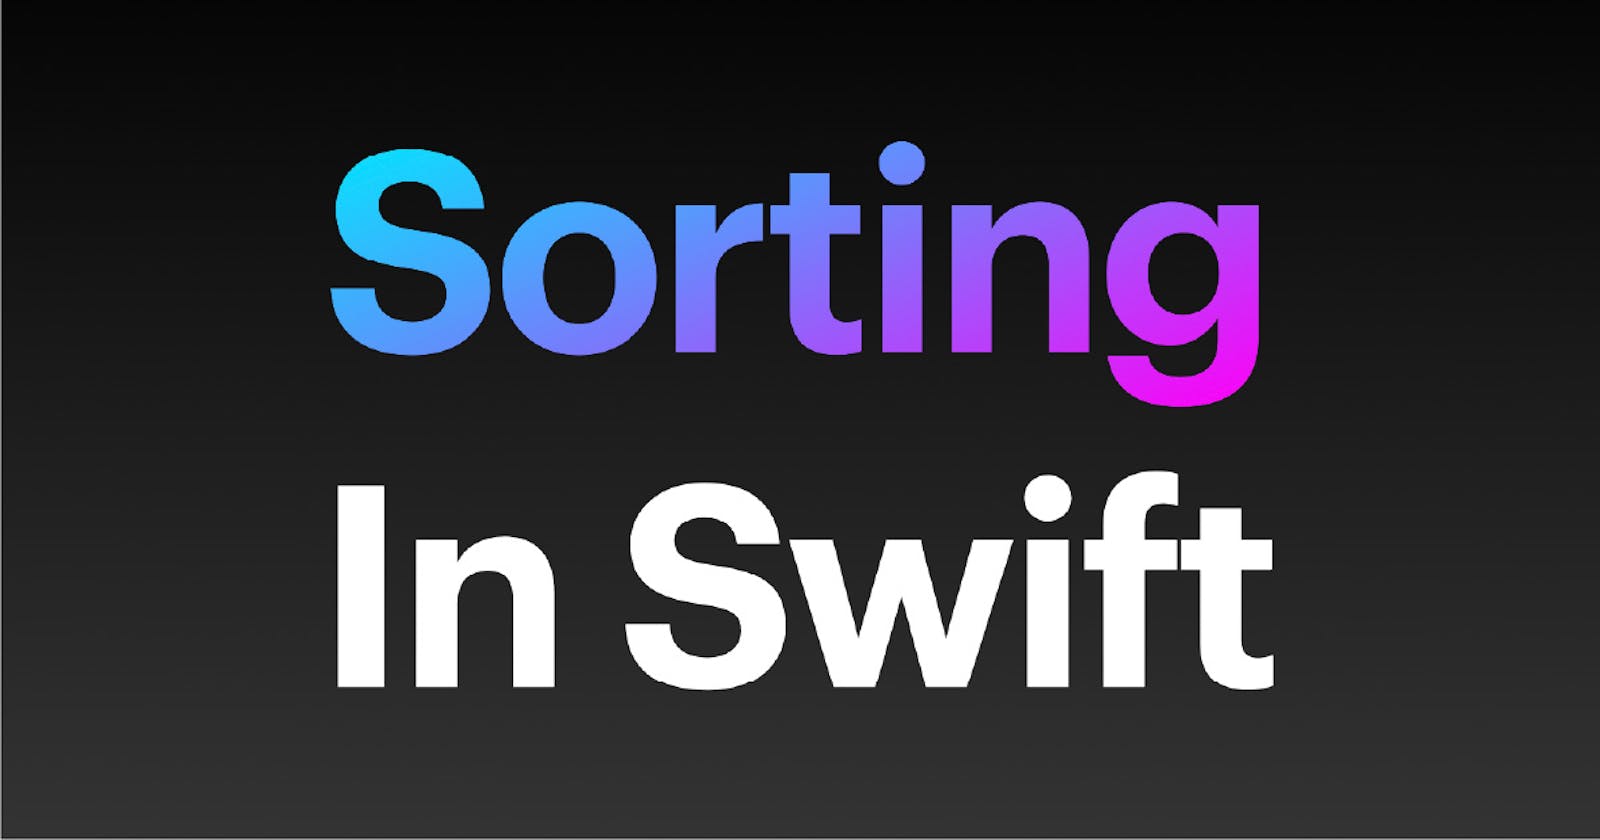 Sorting in Swift